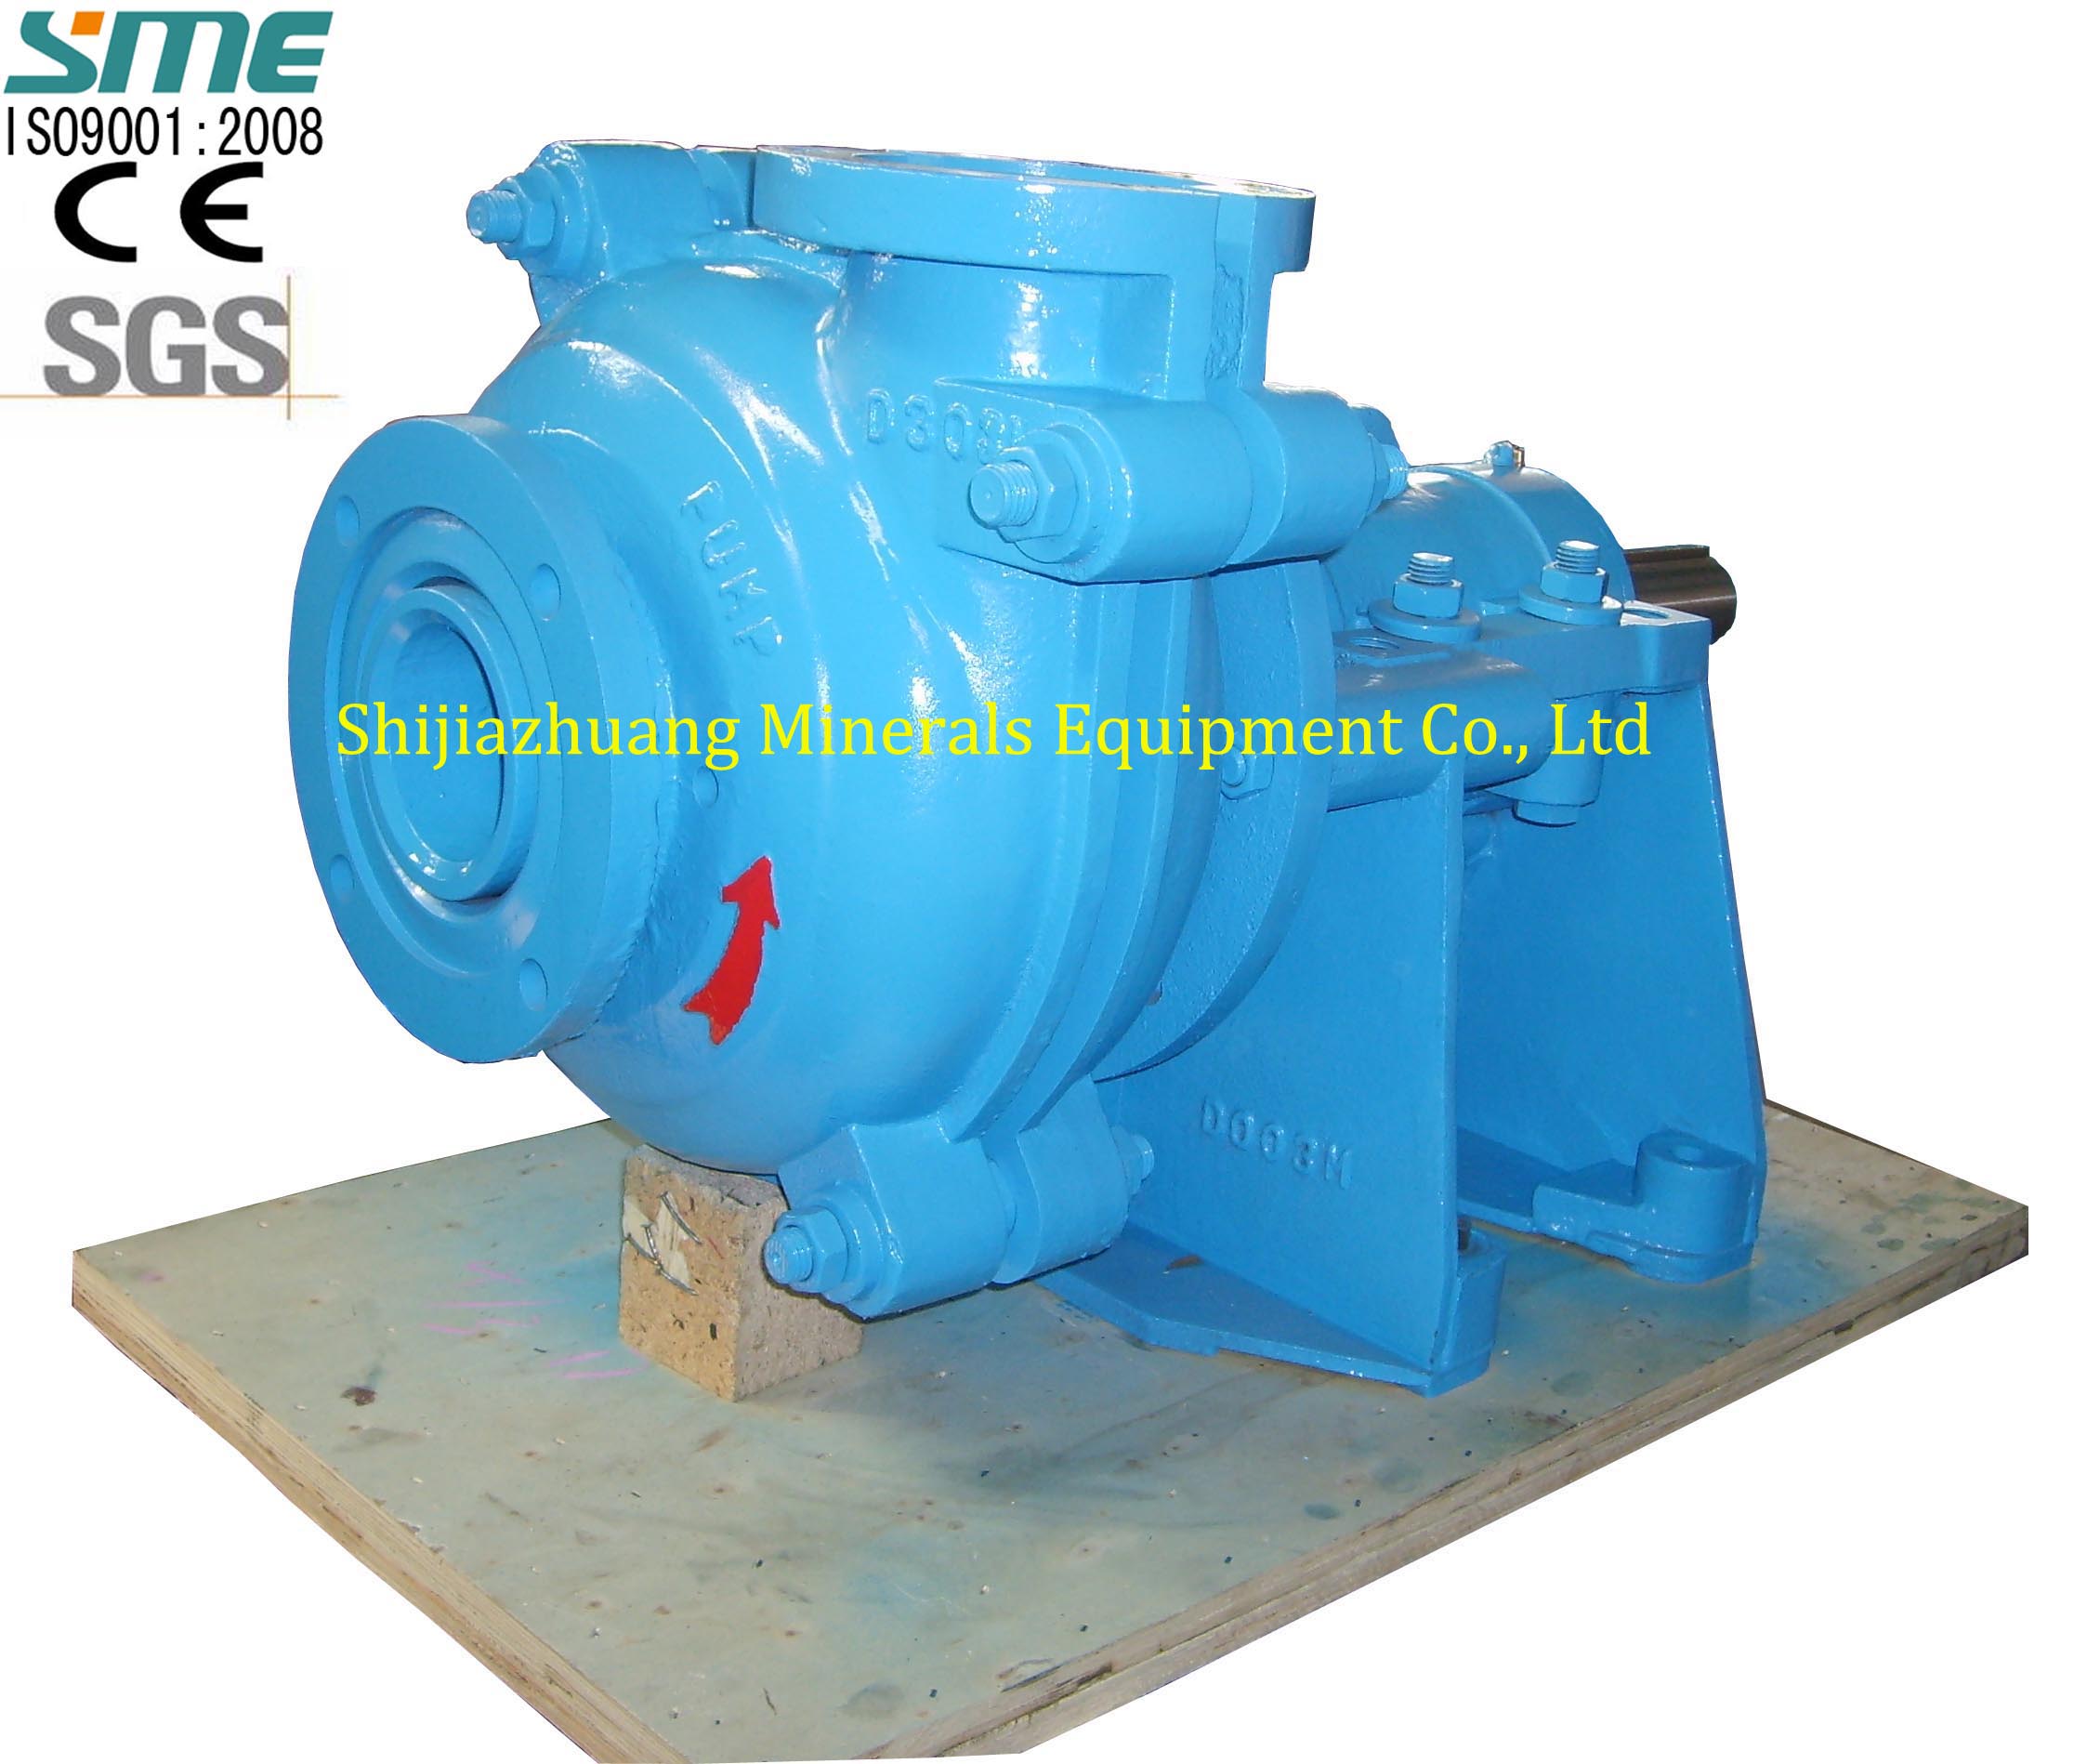 PU polyurethane slurry pump part made in China shijiazhuang